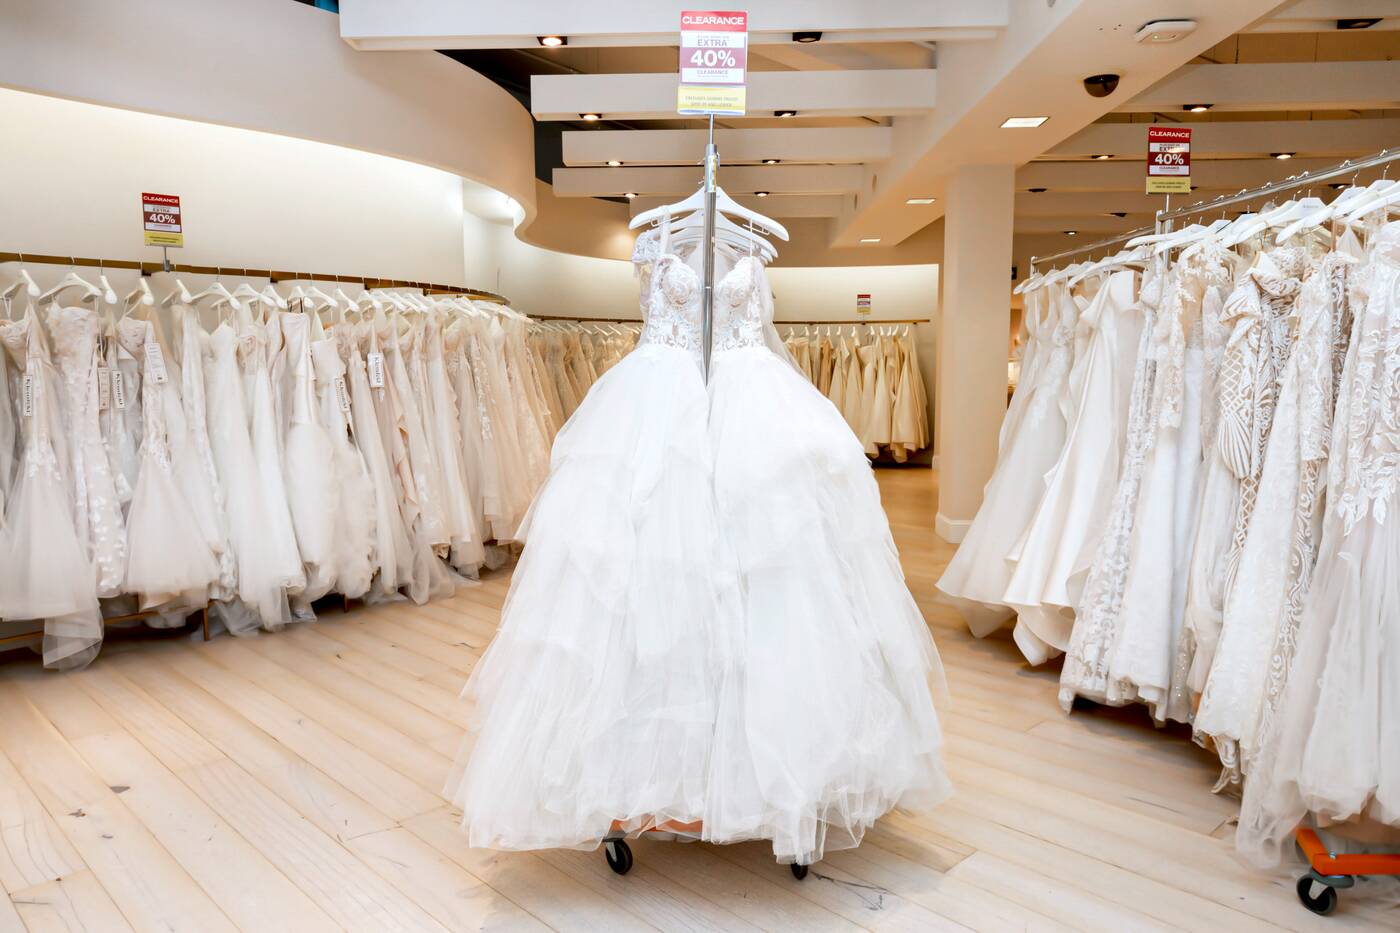 Toronto brides can get massive savings on over 1,000 dresses at Kleinfeld  Hudson's Bay